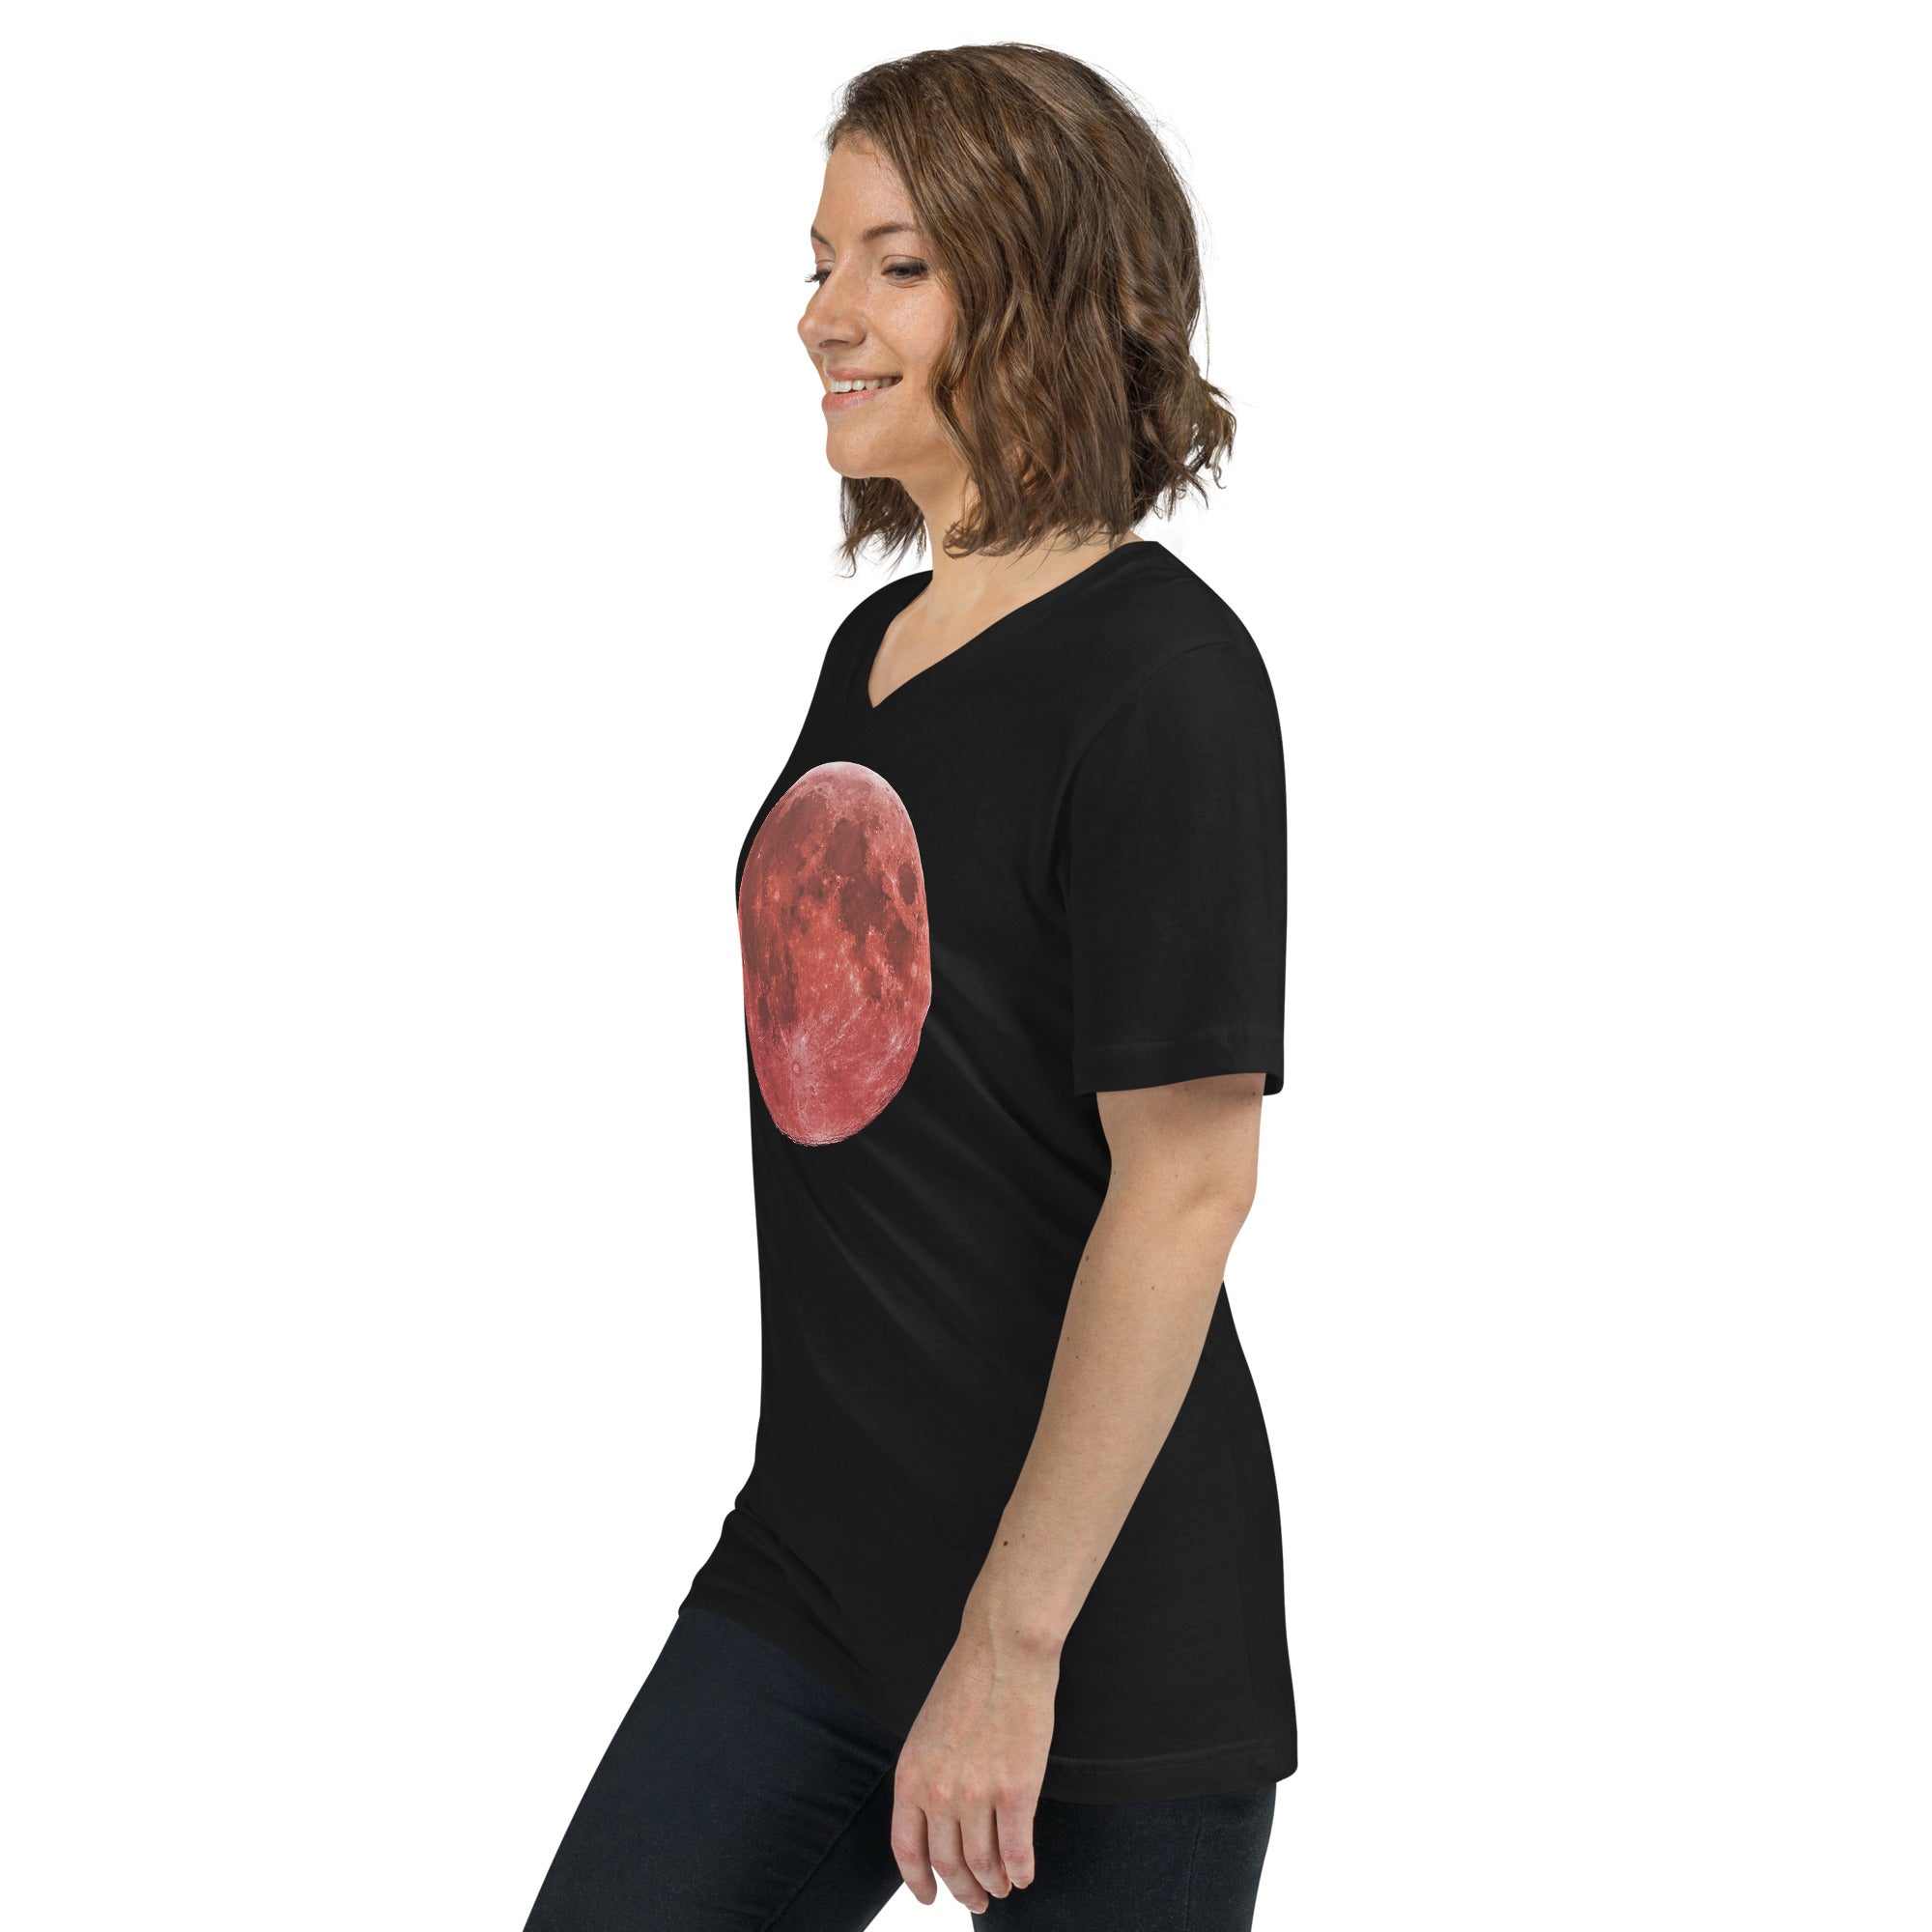 Blood Red Moon Total Lunar Eclipse Women’s Short Sleeve V-Neck T-Shirt - Edge of Life Designs